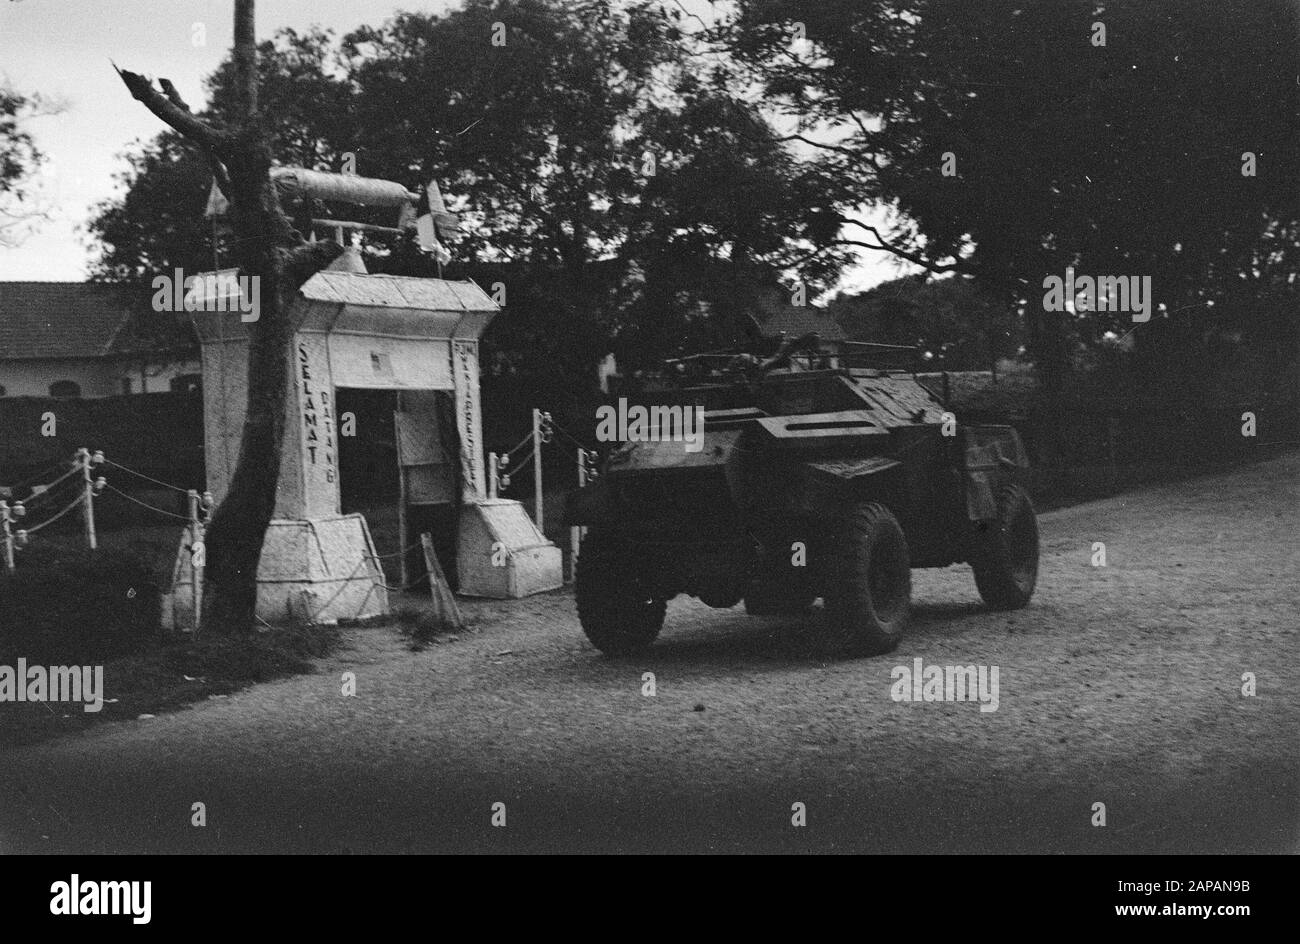 Loeboek Pakem en Baoengan Description: Occupation of Siantar. Scoutscar passes gate Date: 29 July 1948 Location: Indonesia, Dutch East Indies, Sumatra Stock Photo